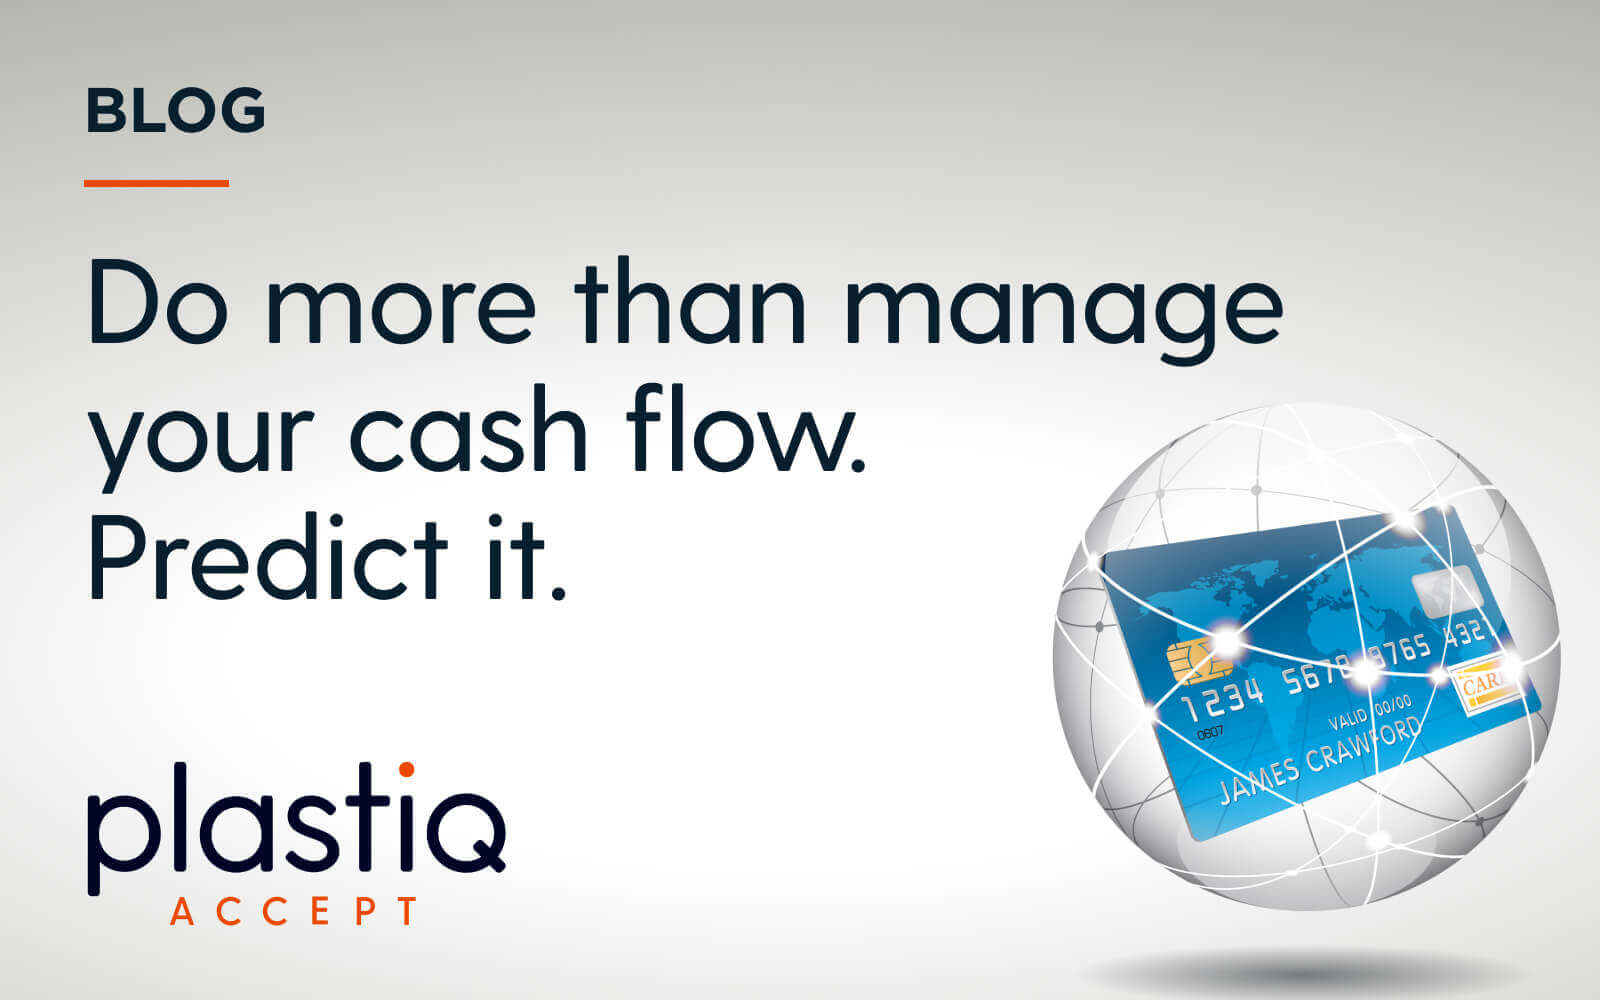 Plastiq-Blog-do-more-than-manage-cash-flow-predict-it